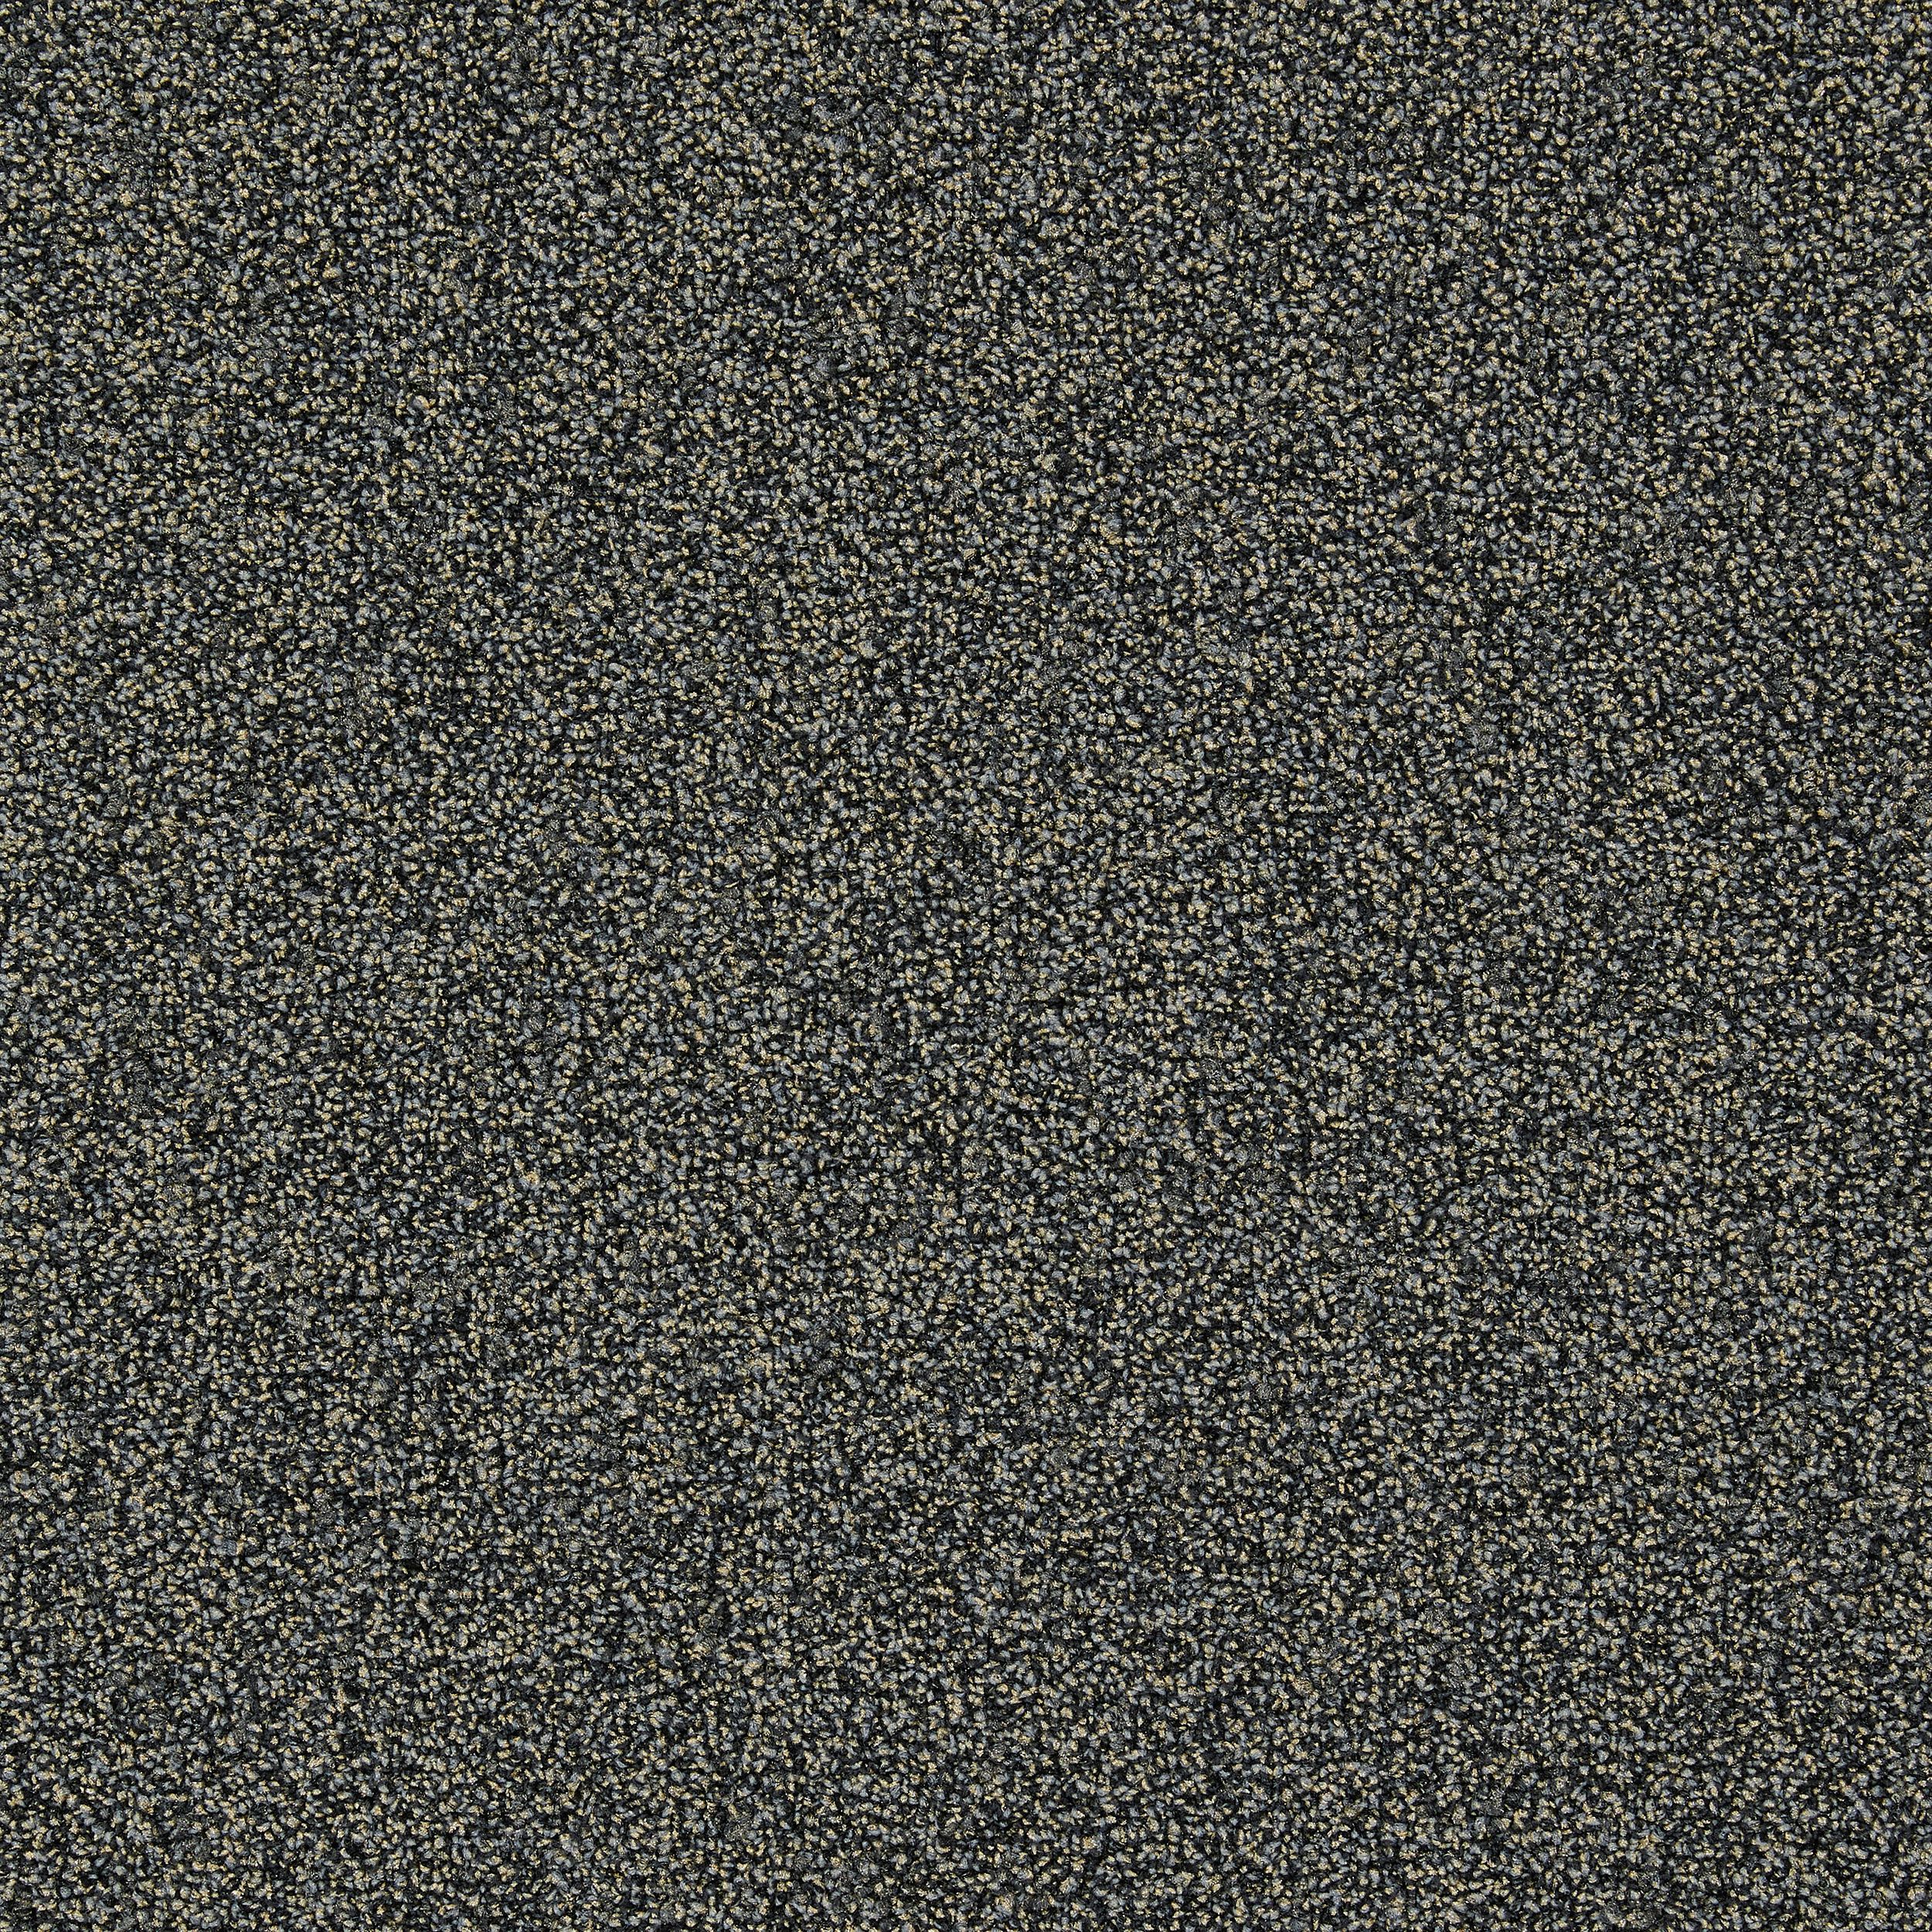 Dolomite Carpet Tile In Golden Beryl número de imagen 2